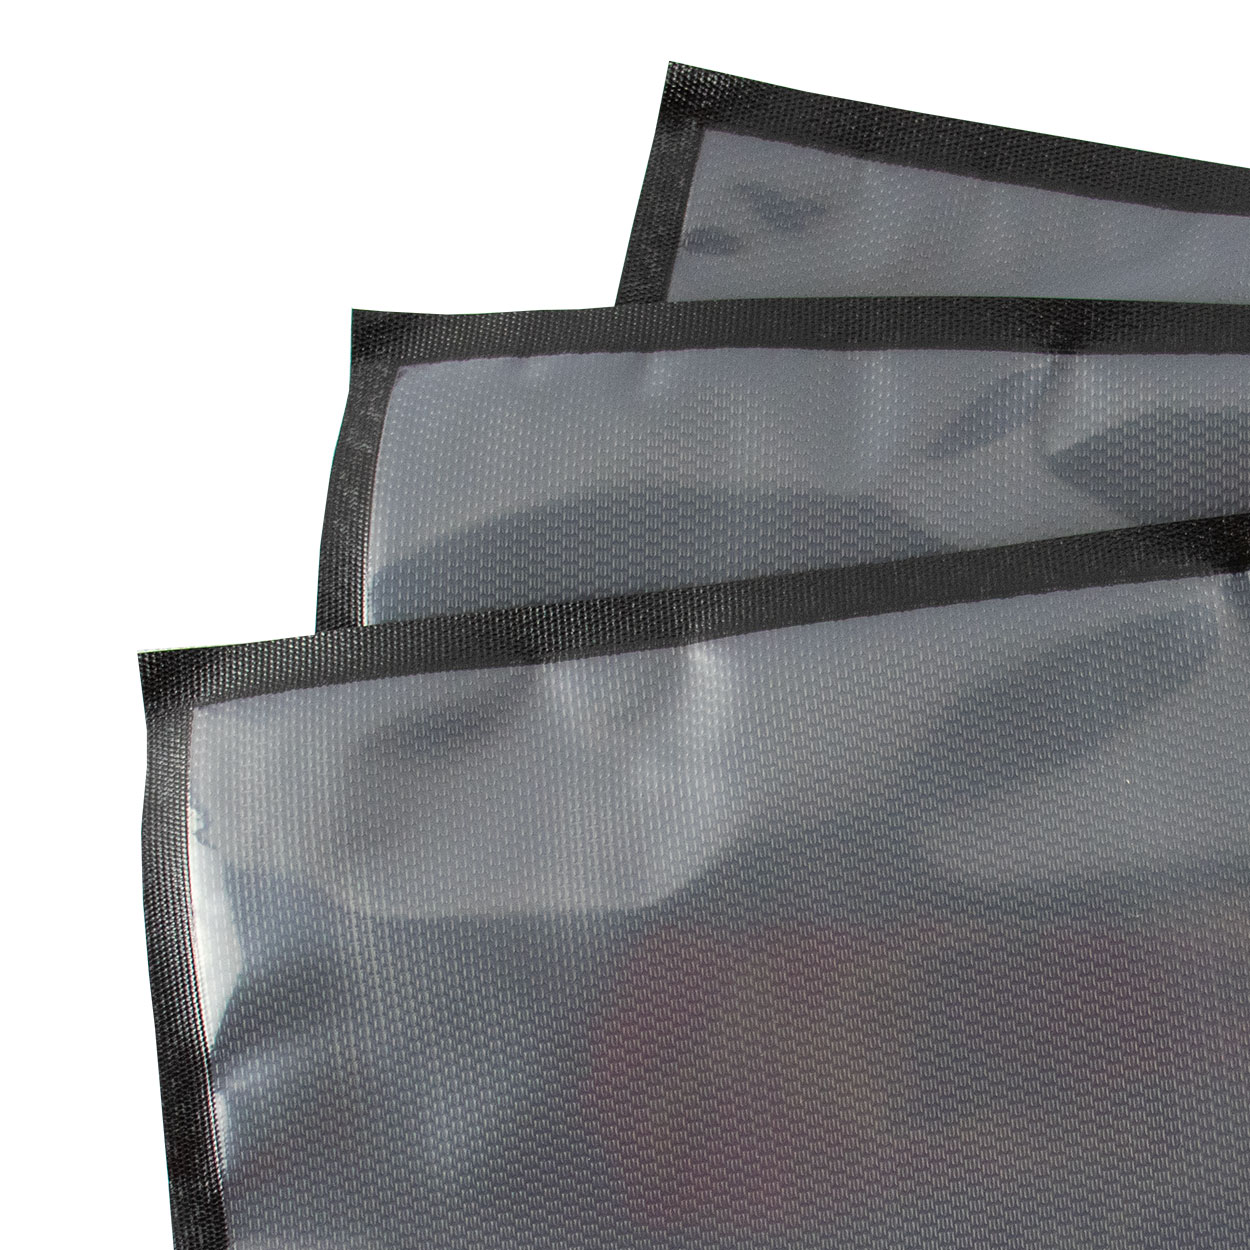 Shield N Seal 11″ x 24″ All Black Vacuum Sealer Bags SNS 400 Vac Sealing Precut 